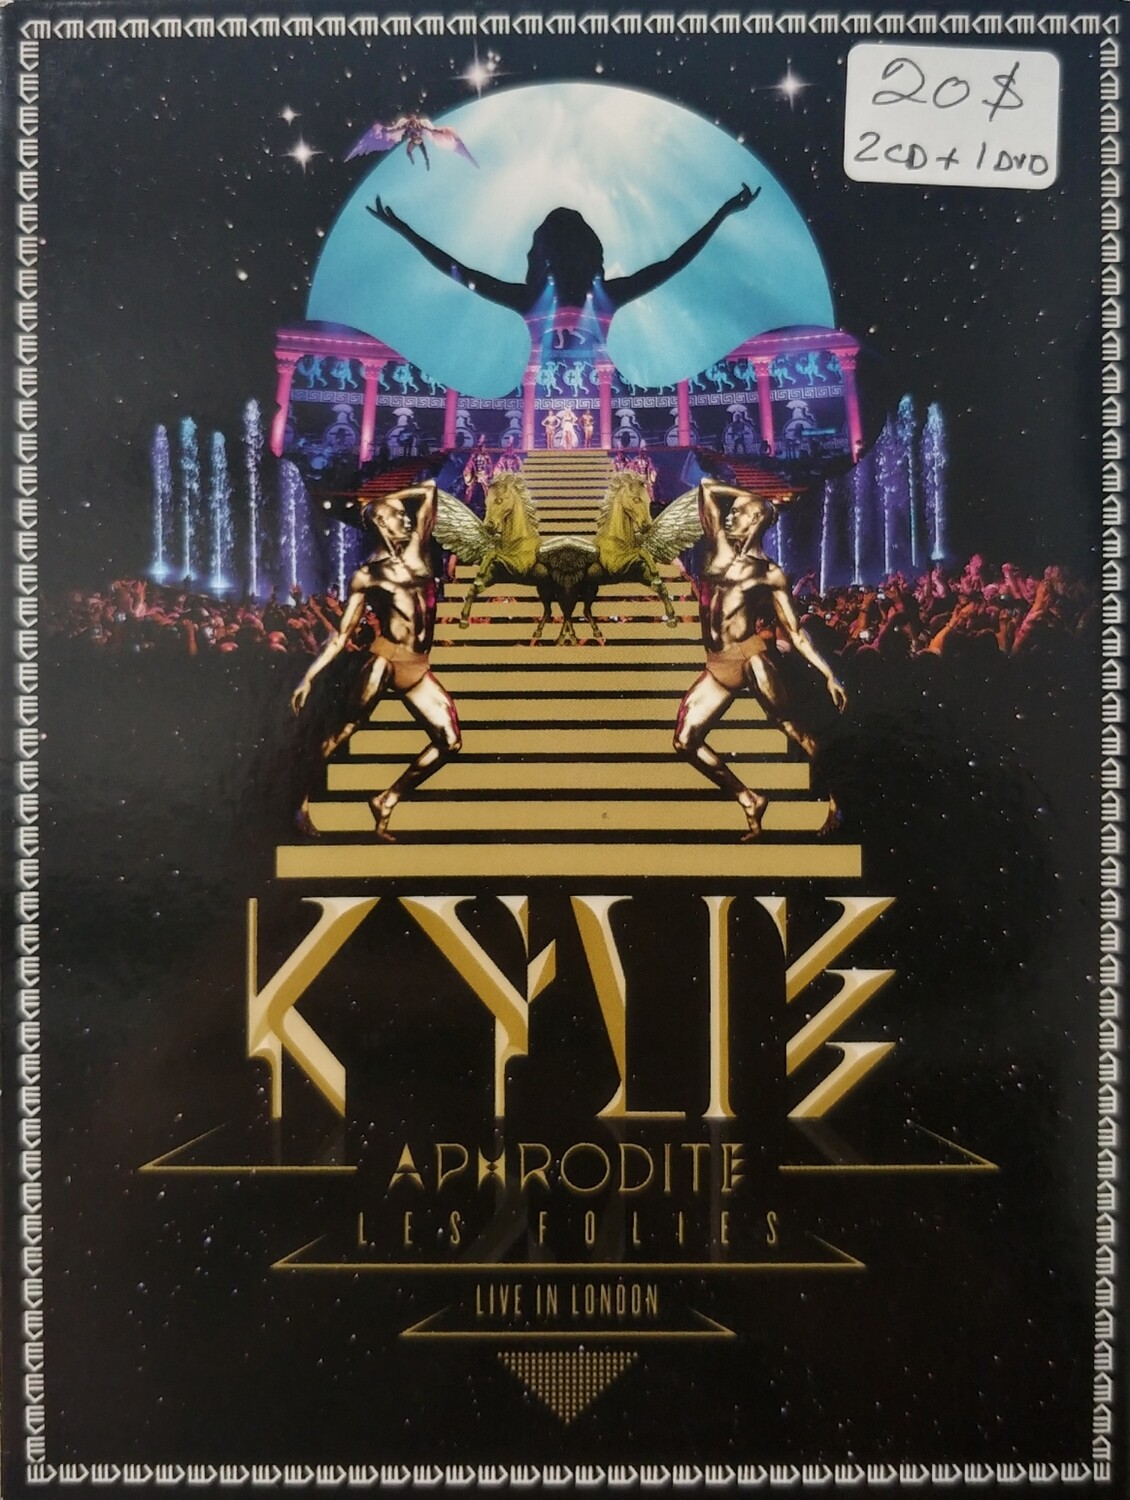 Kylie Minogue - Aphrodite Les folies (DVD)